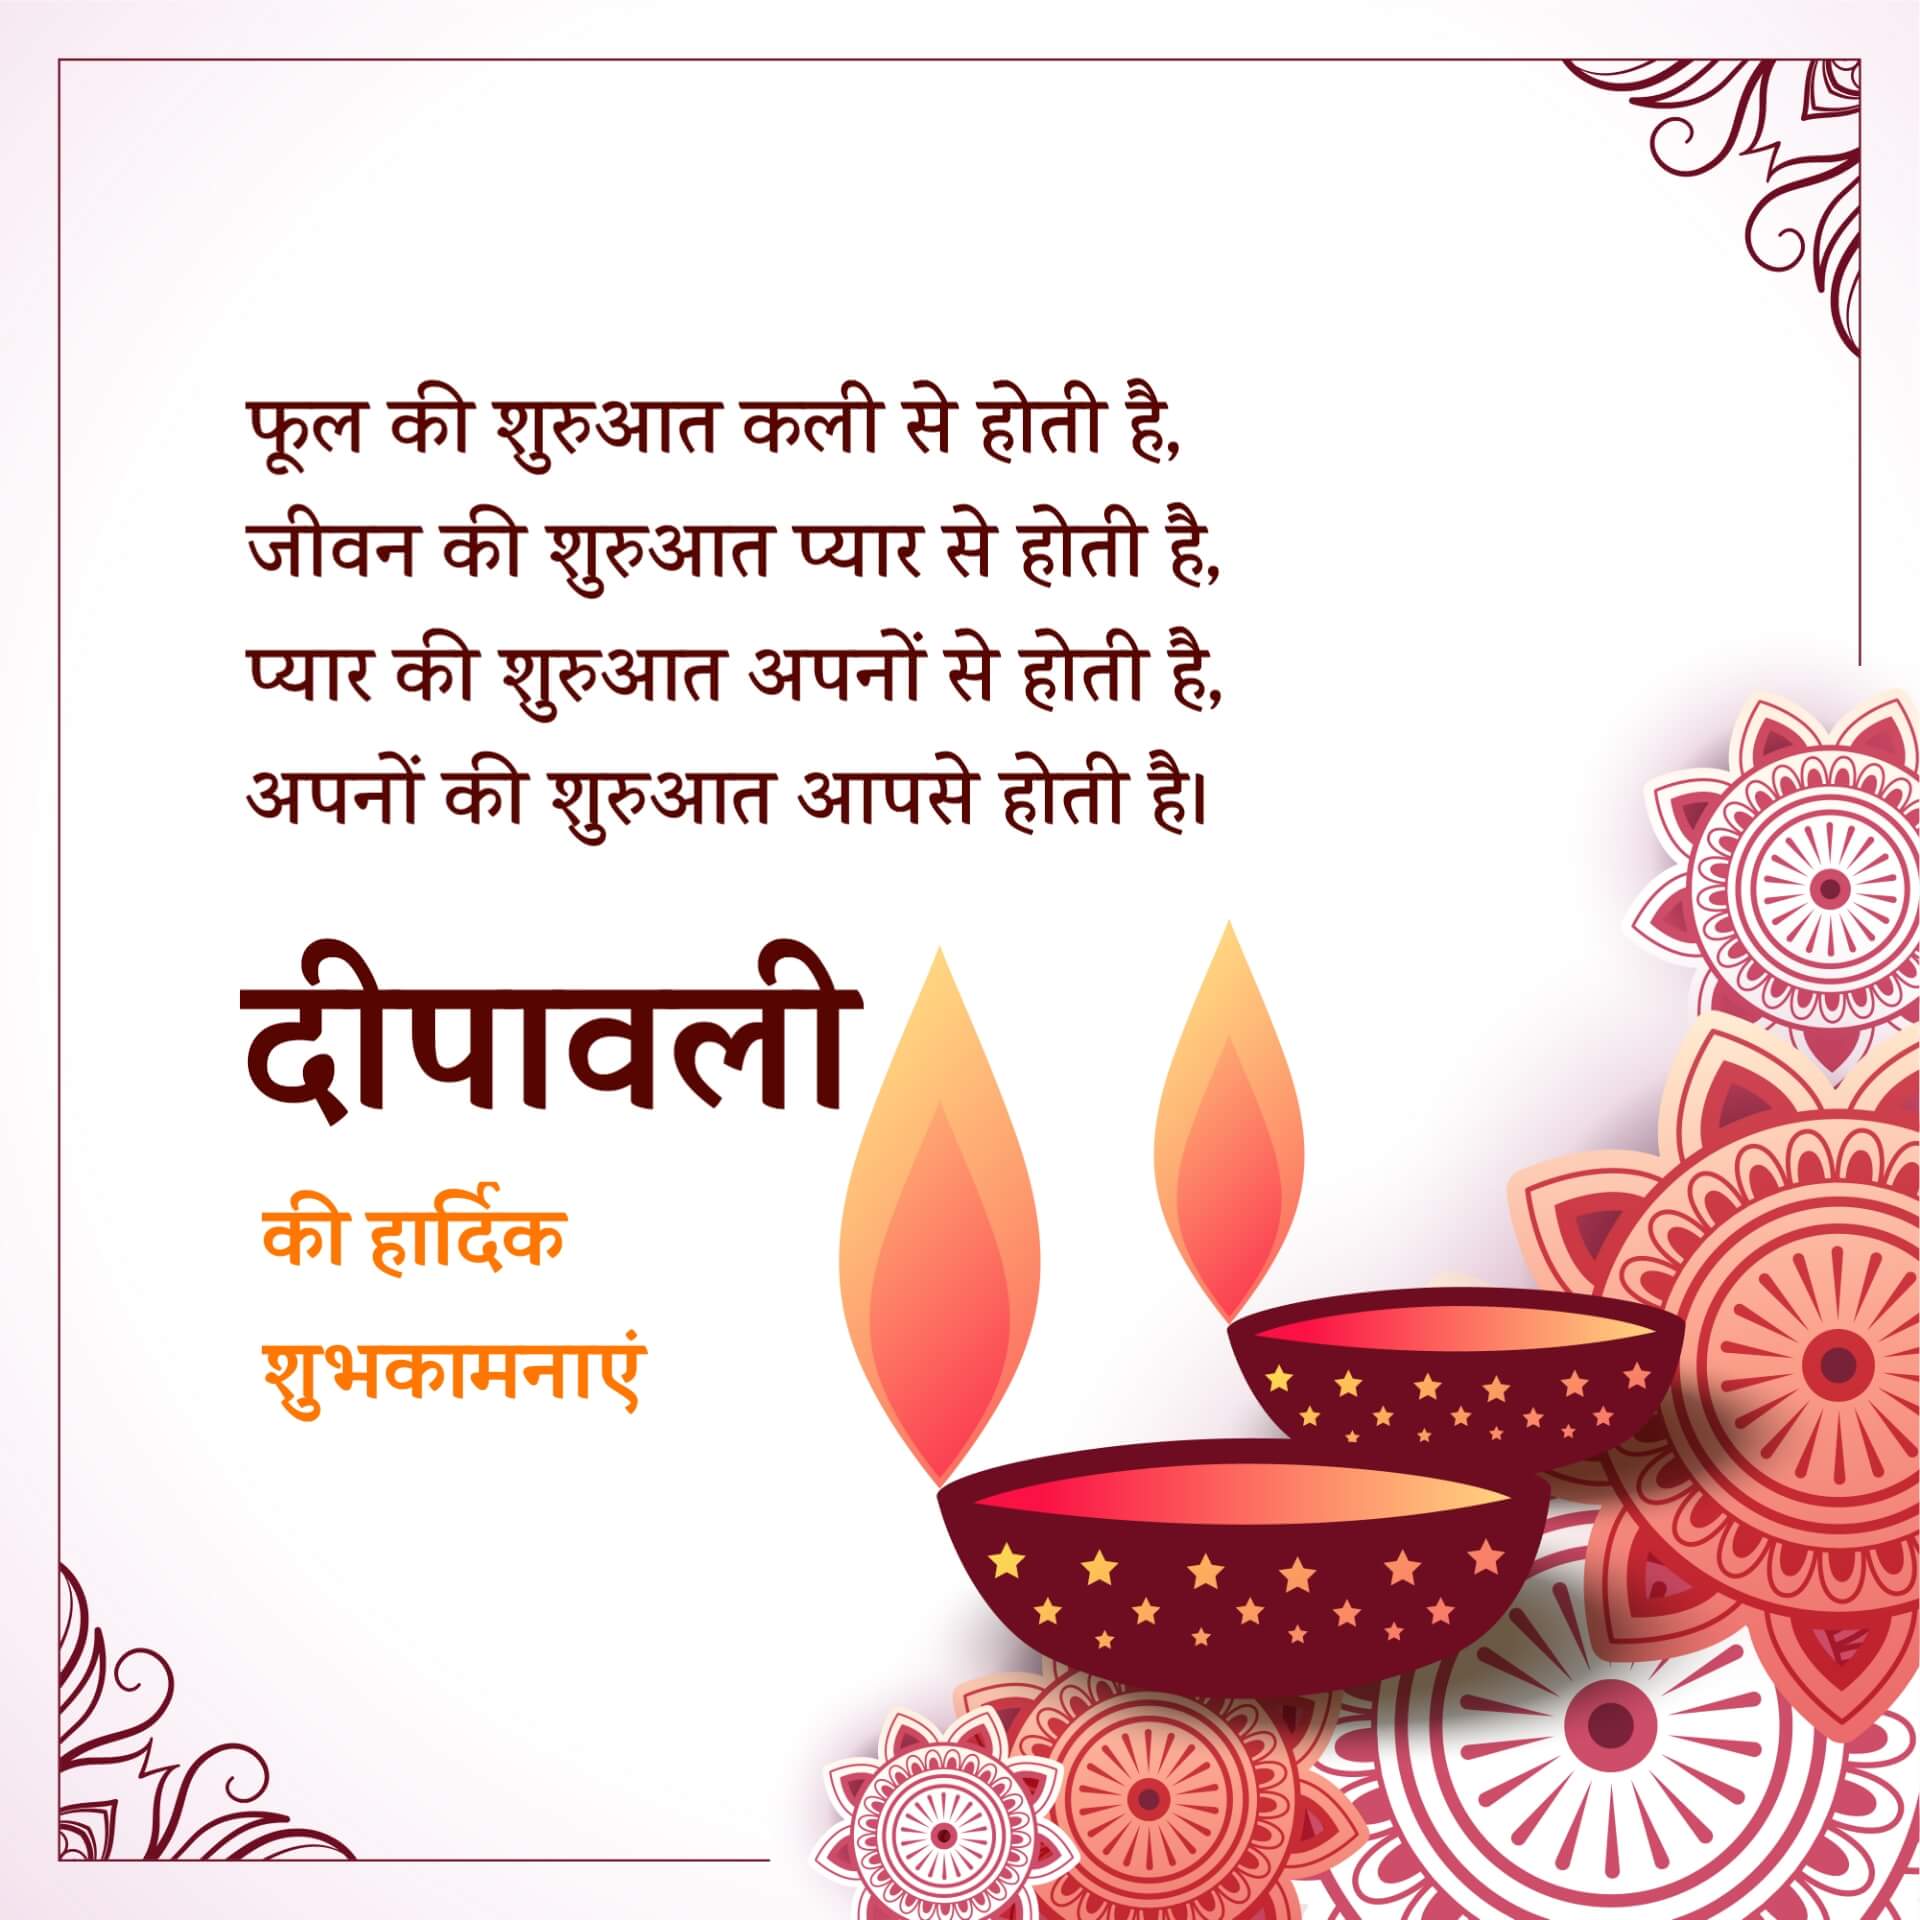 Hindi Diwali Wishes for WhatsApp